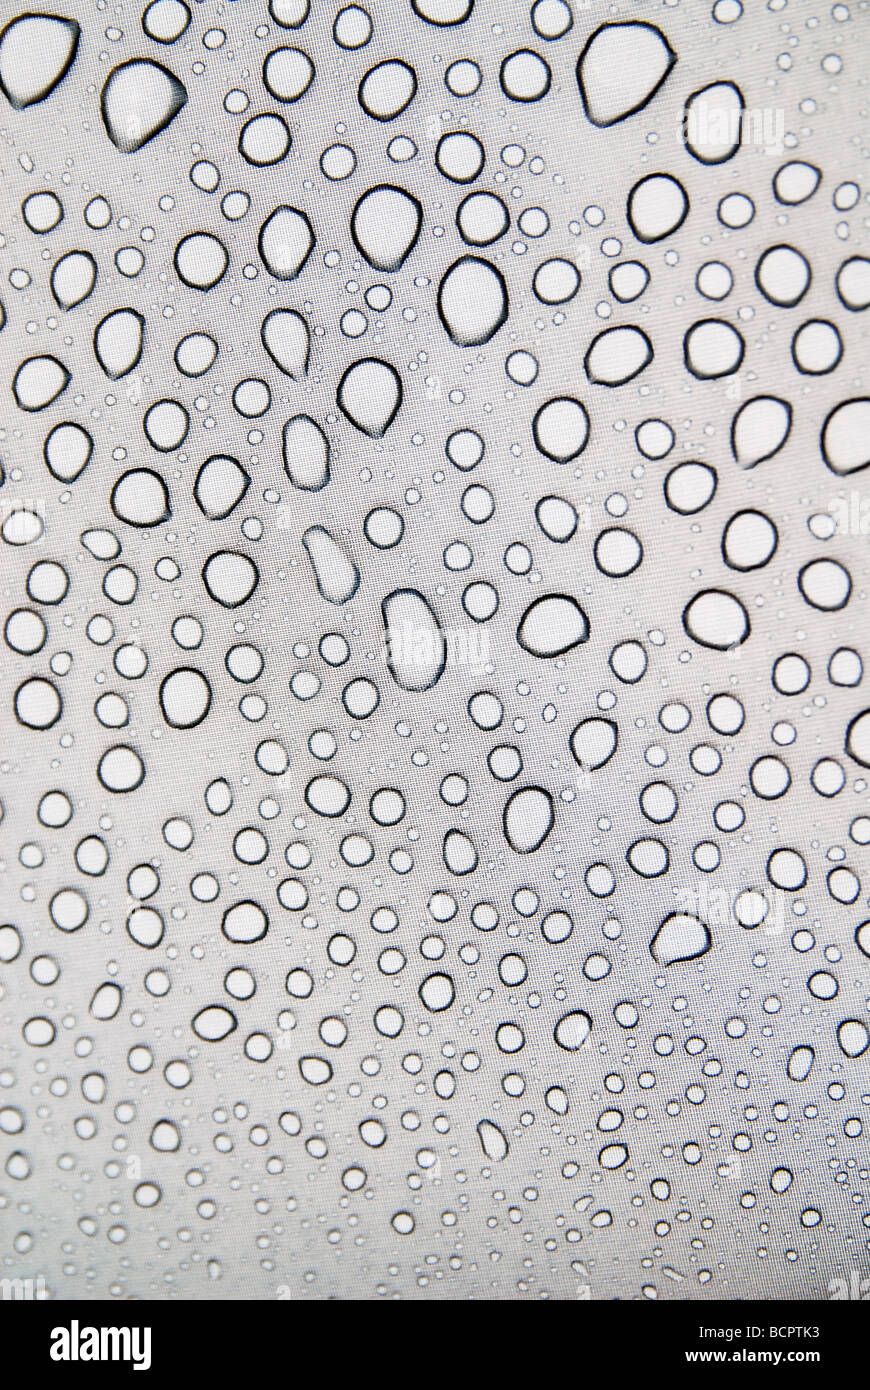 Rain drops on canvas fabric Stock Photo